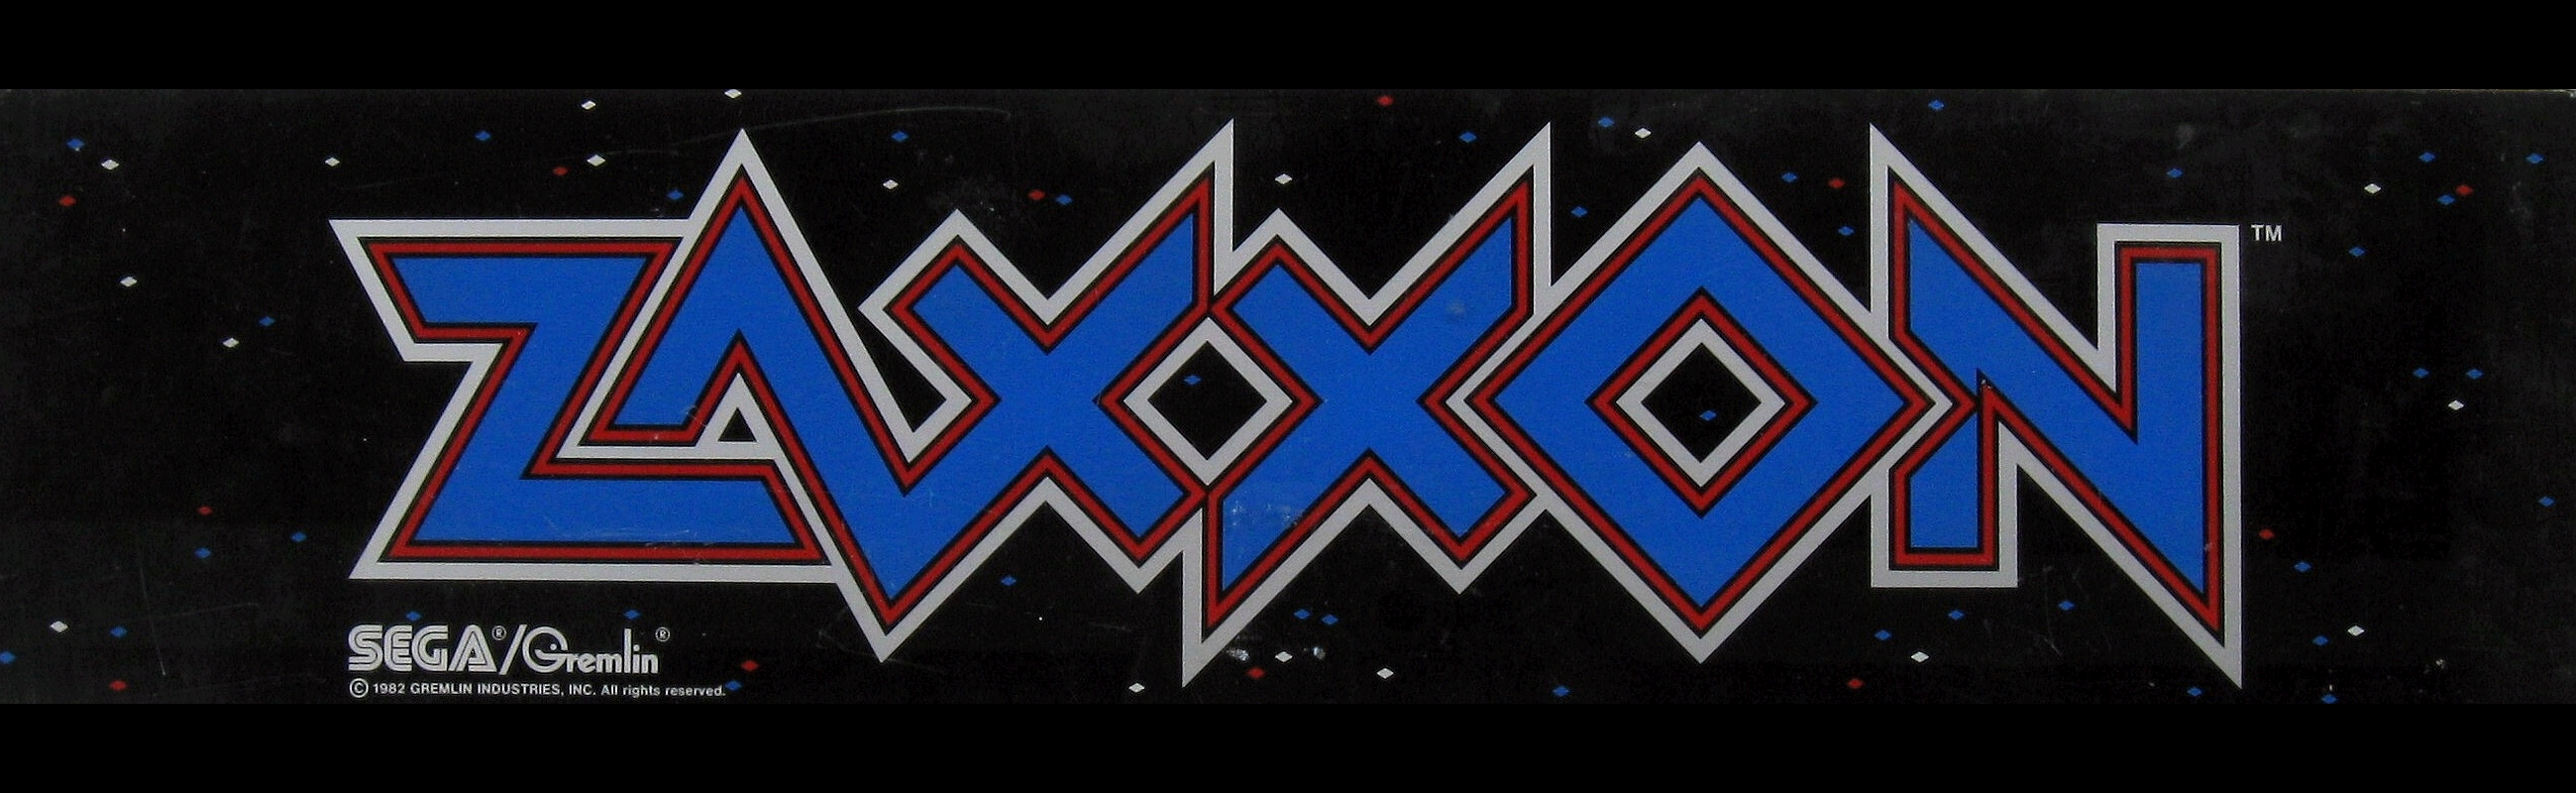 Video Game Zaxxon HD Wallpaper | Background Image